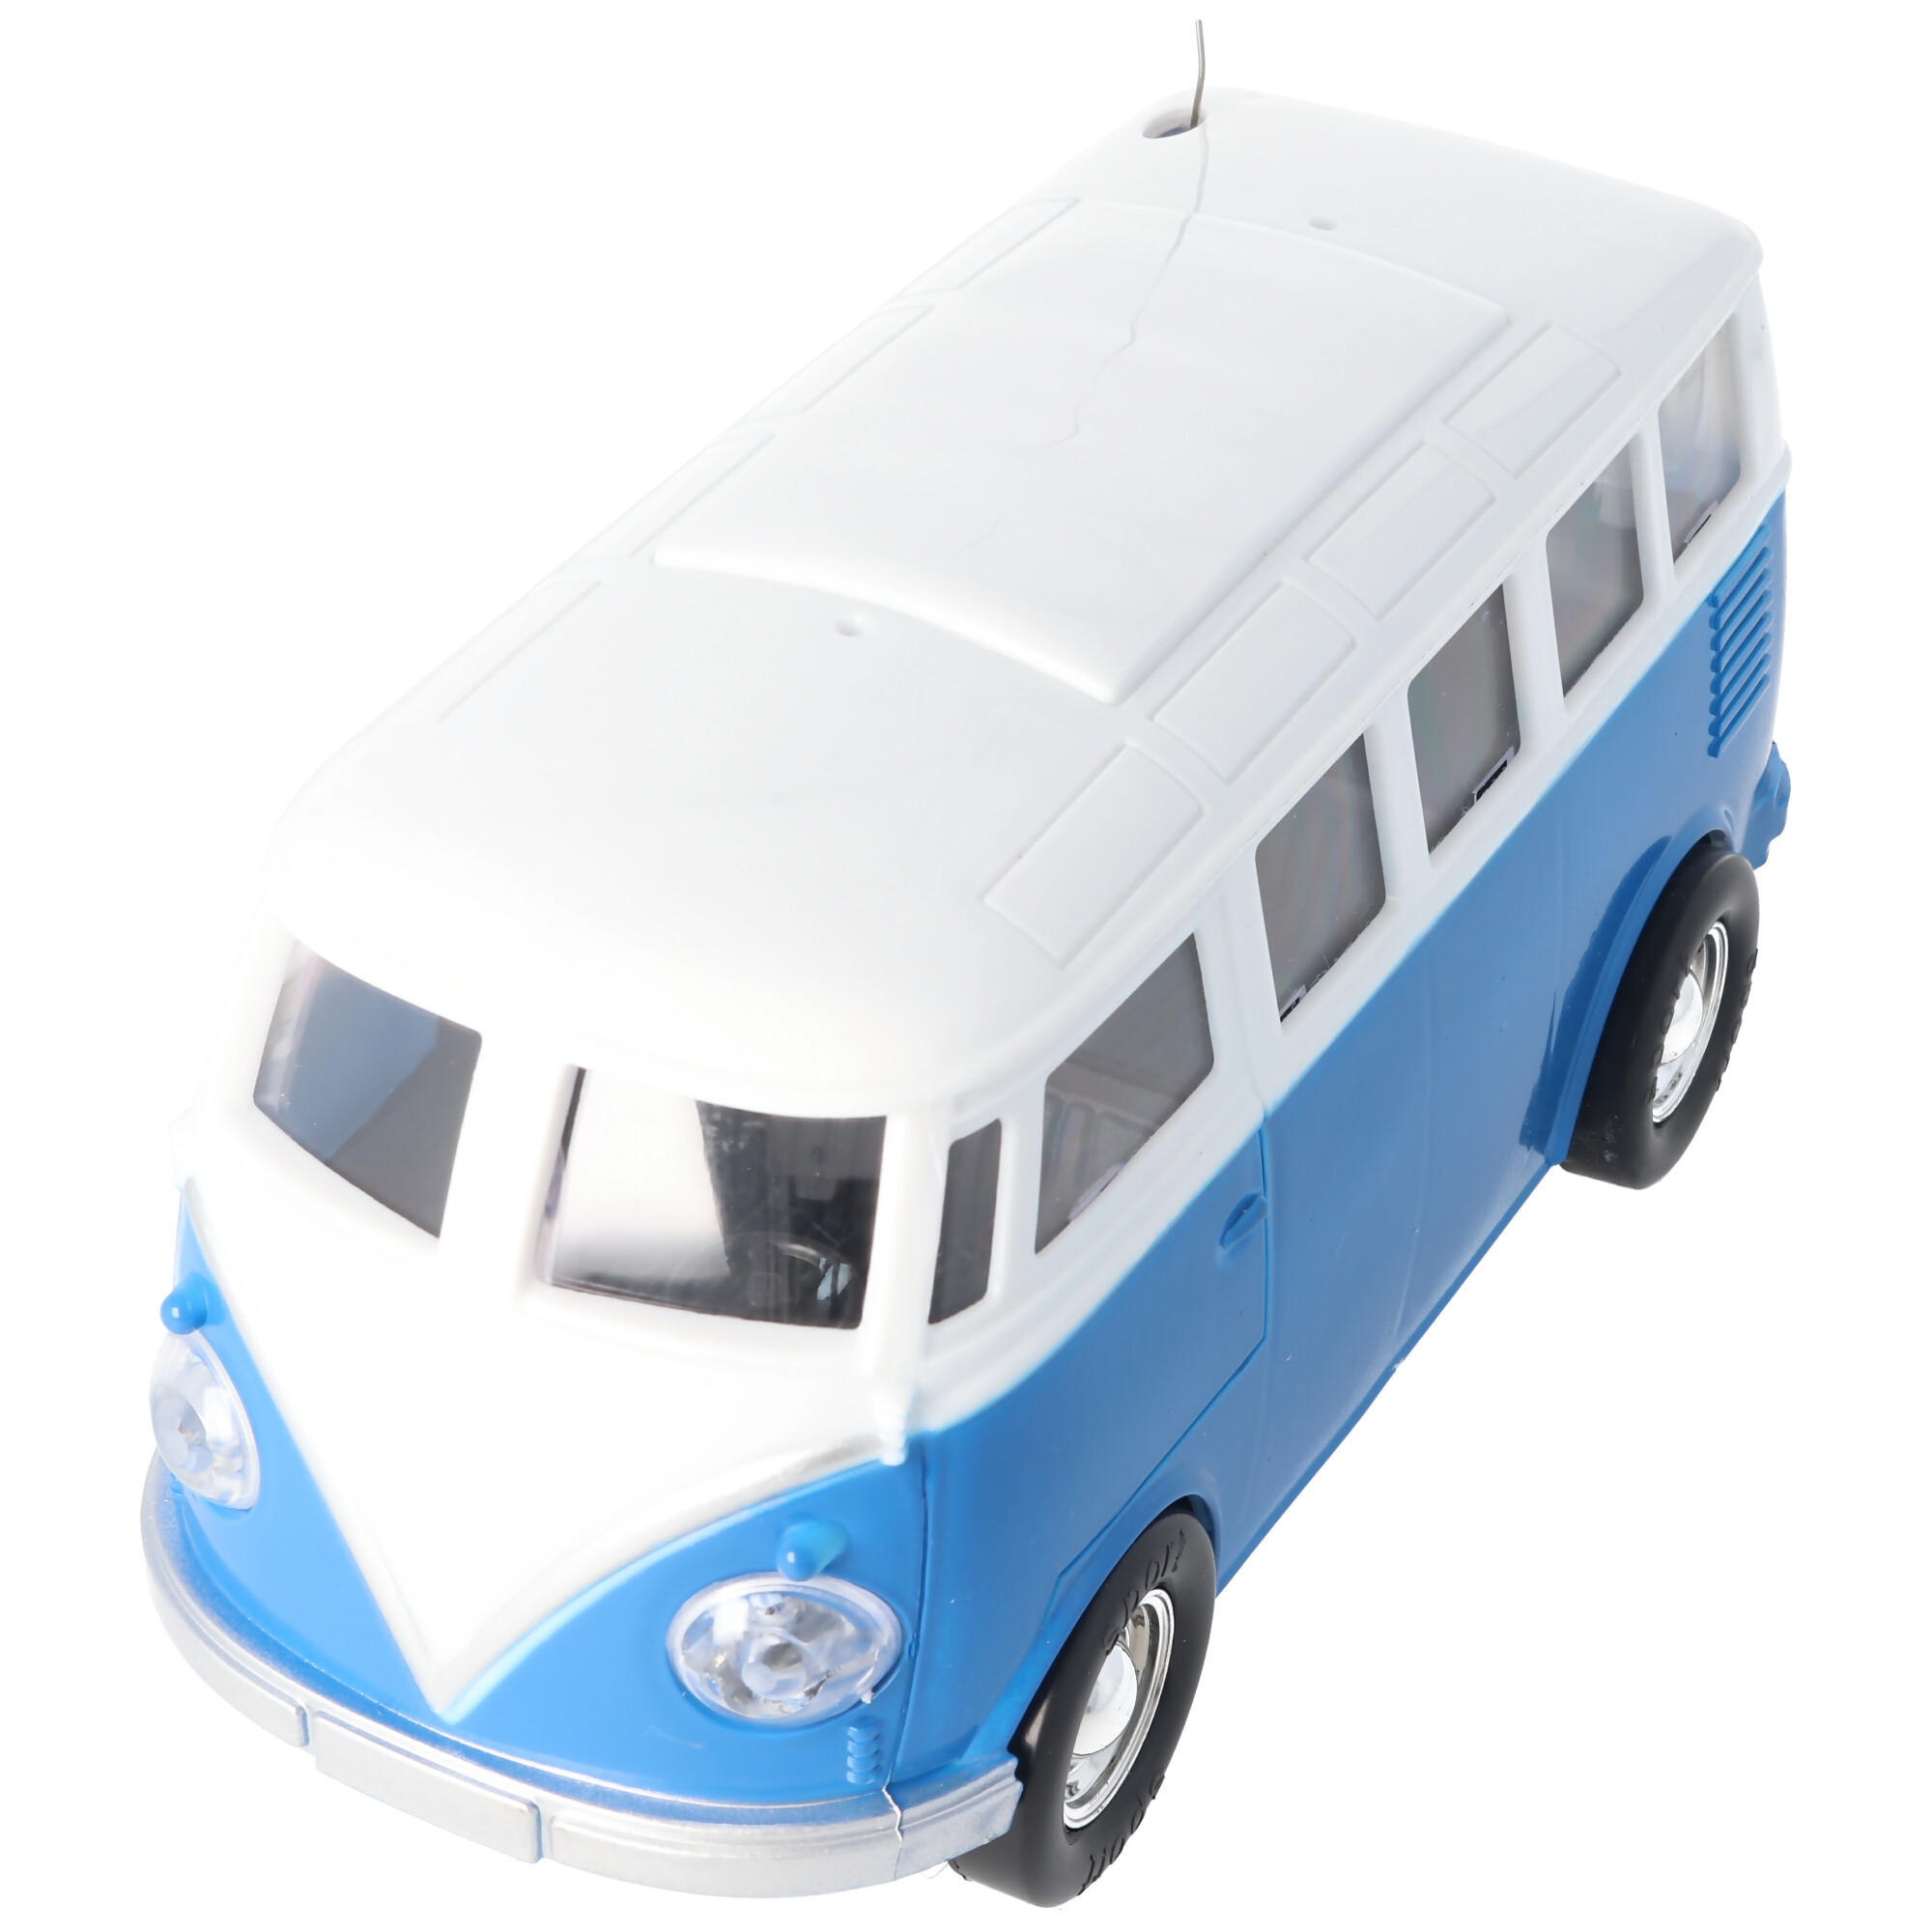 Retro Bus Bulli RC-Model im Maßstab 1:24 Farbe blau inklusive 5 AA Mignon Batterien